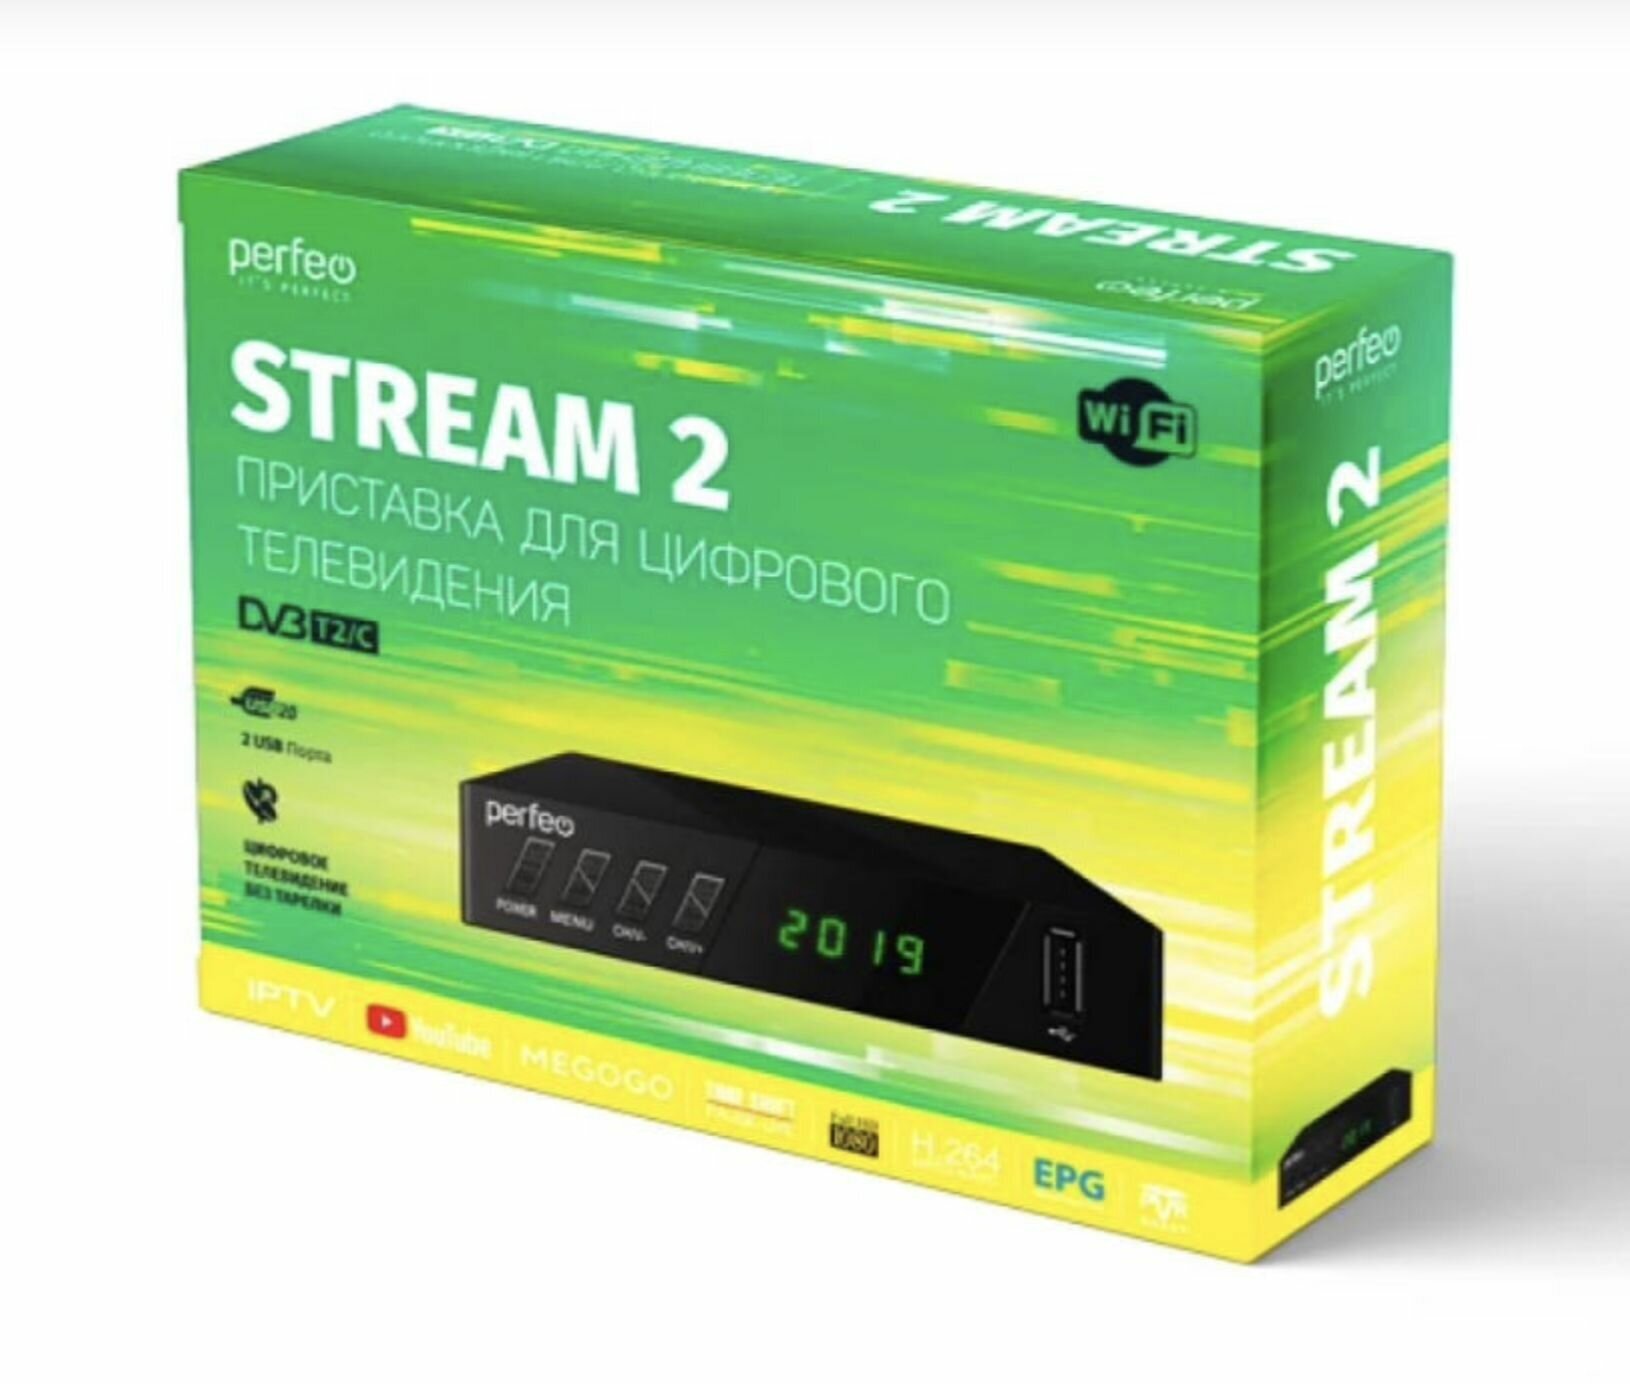 Perfeo DVB-T2/C приставка "STREAM-2" для цифр.TV, Wi-Fi, IPTV, HDMI, 2 USB, DolbyDigital, пульт ДУ - фото №3